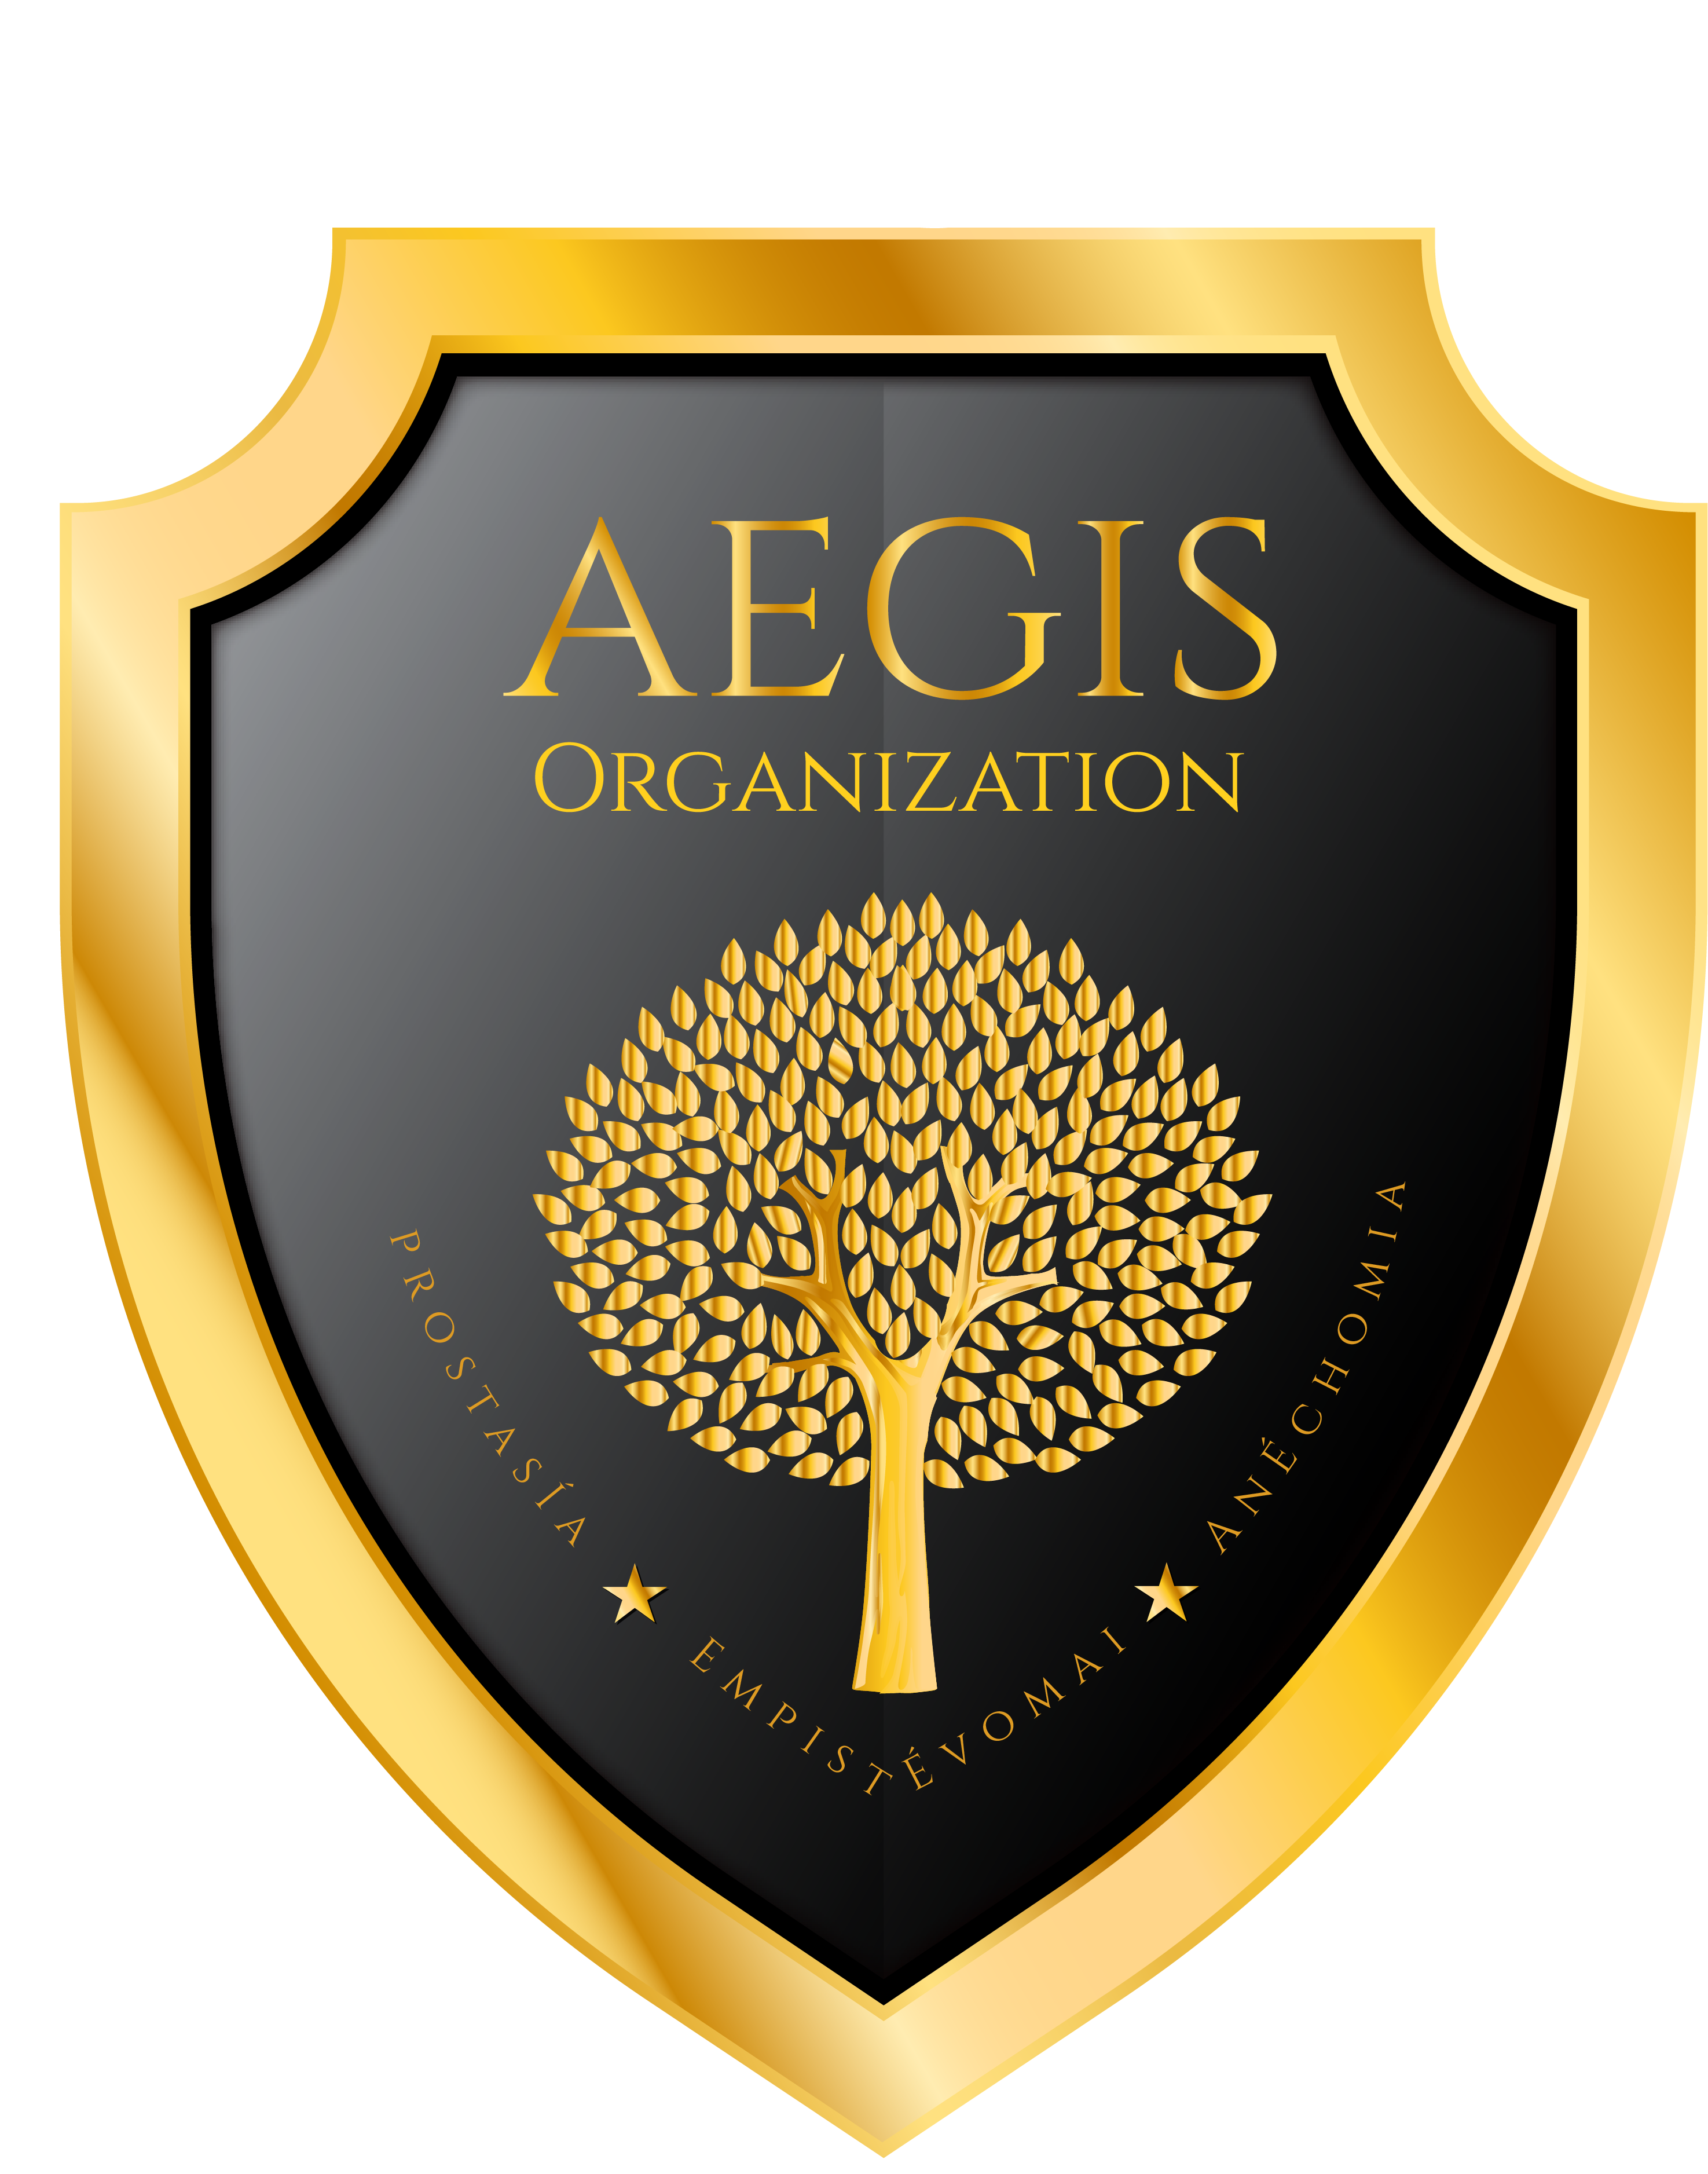 Aegis Organization